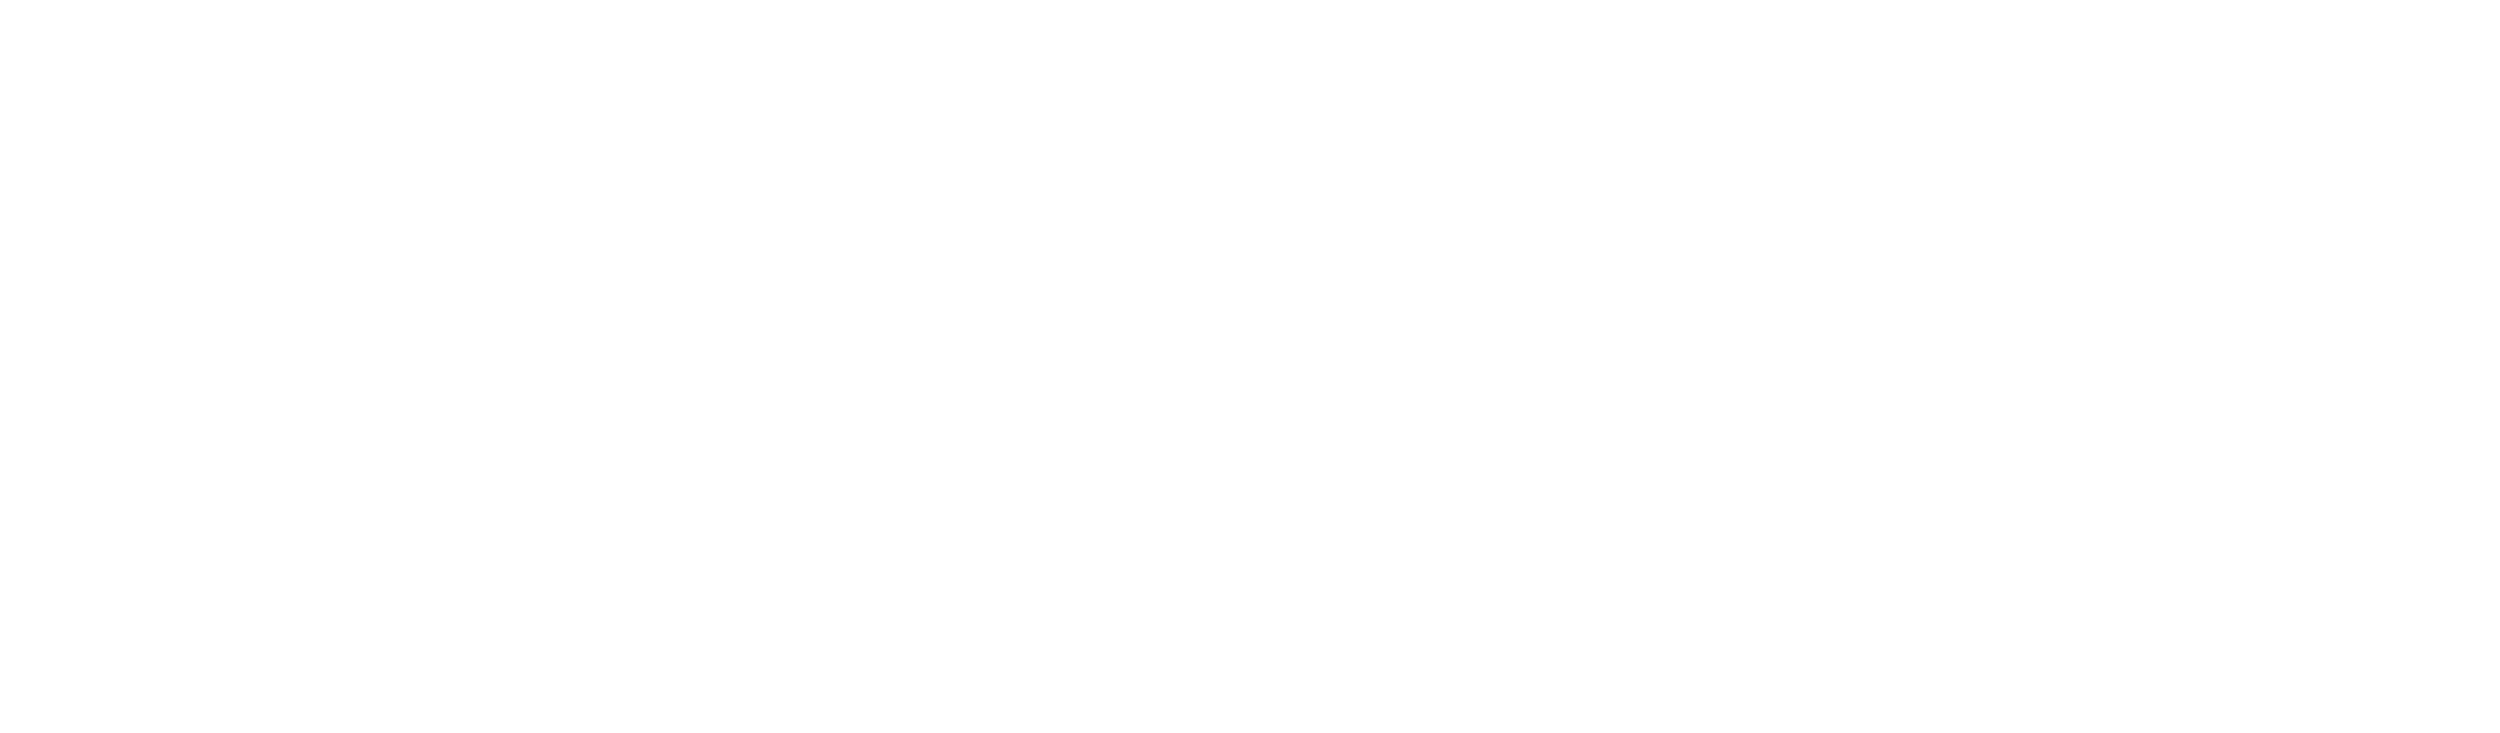 Chobham Wealth Management